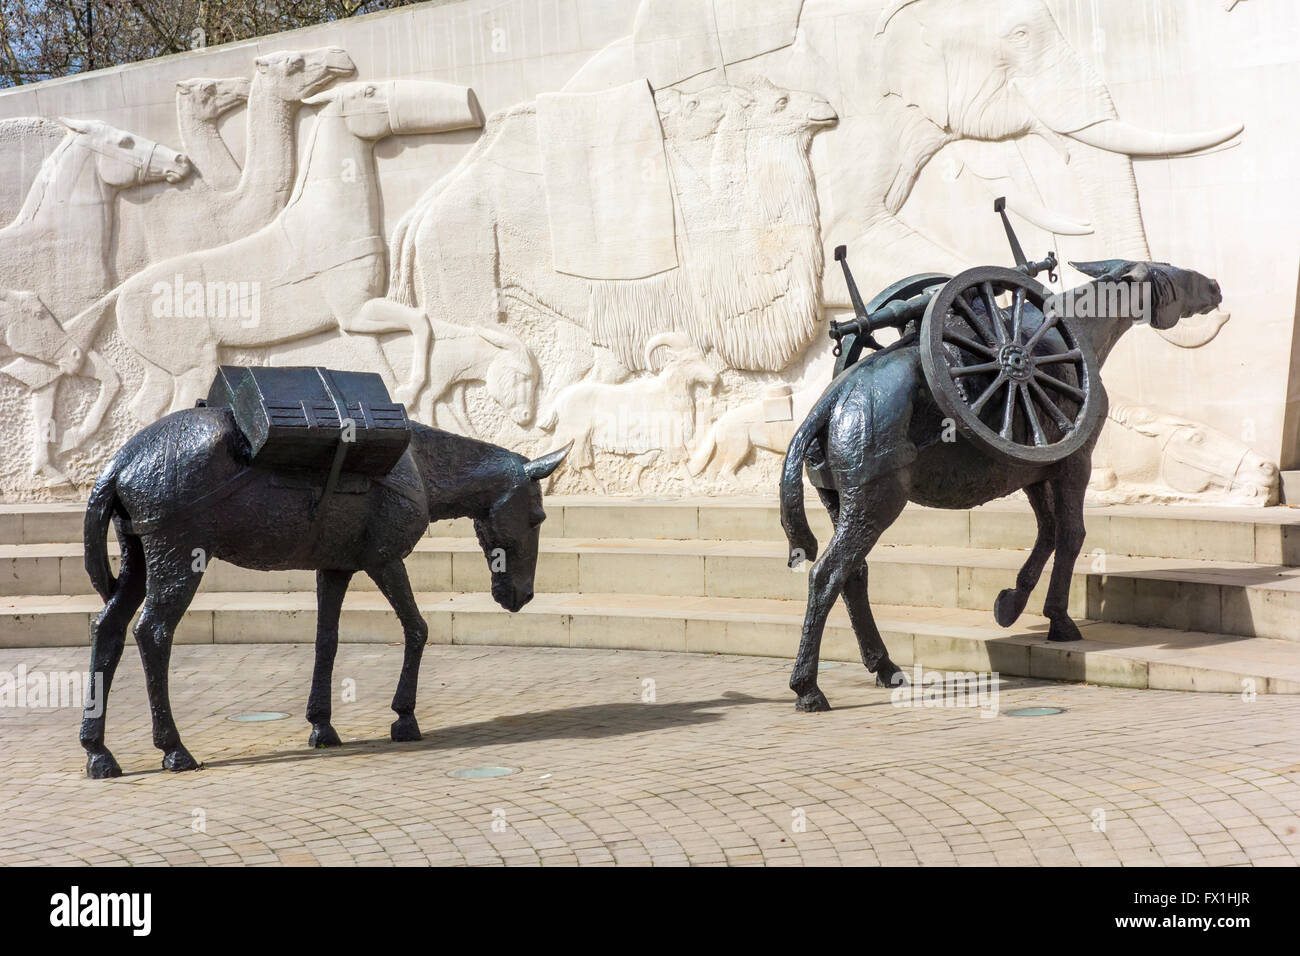 Tiere im Krieg-Denkmal, Hyde Park, London, UK. Bildhauer David Backhouse Stockfoto